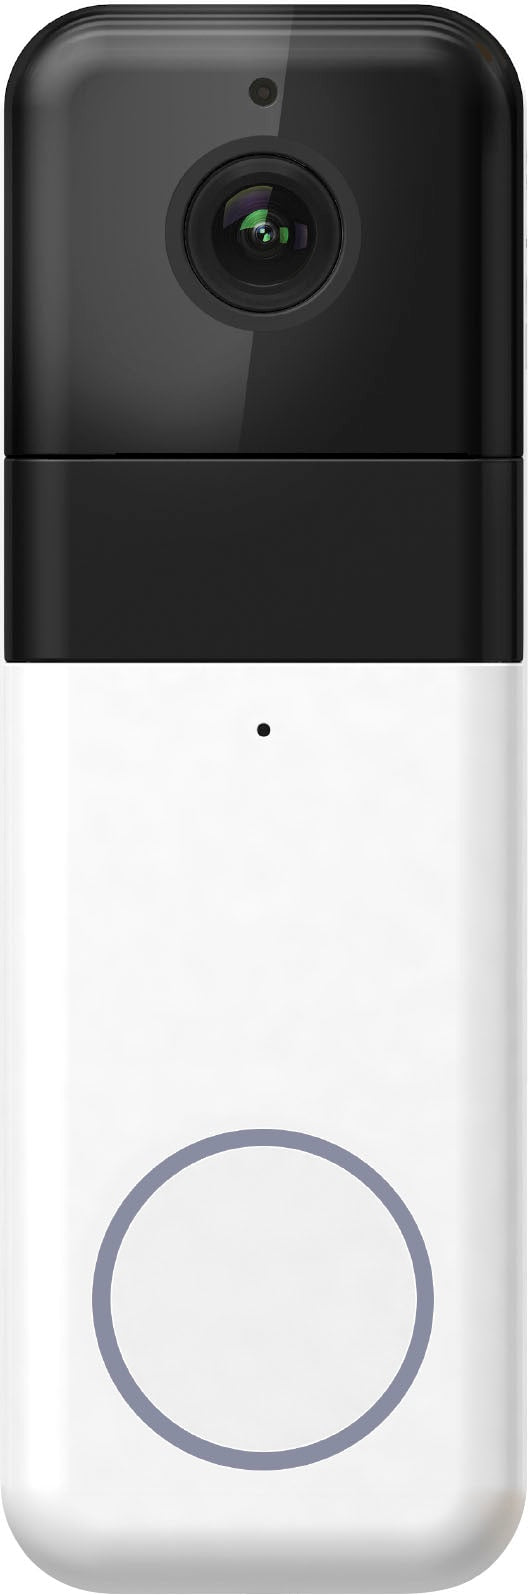 Wyze - Wireless Video Doorbell Camera Pro - White_1